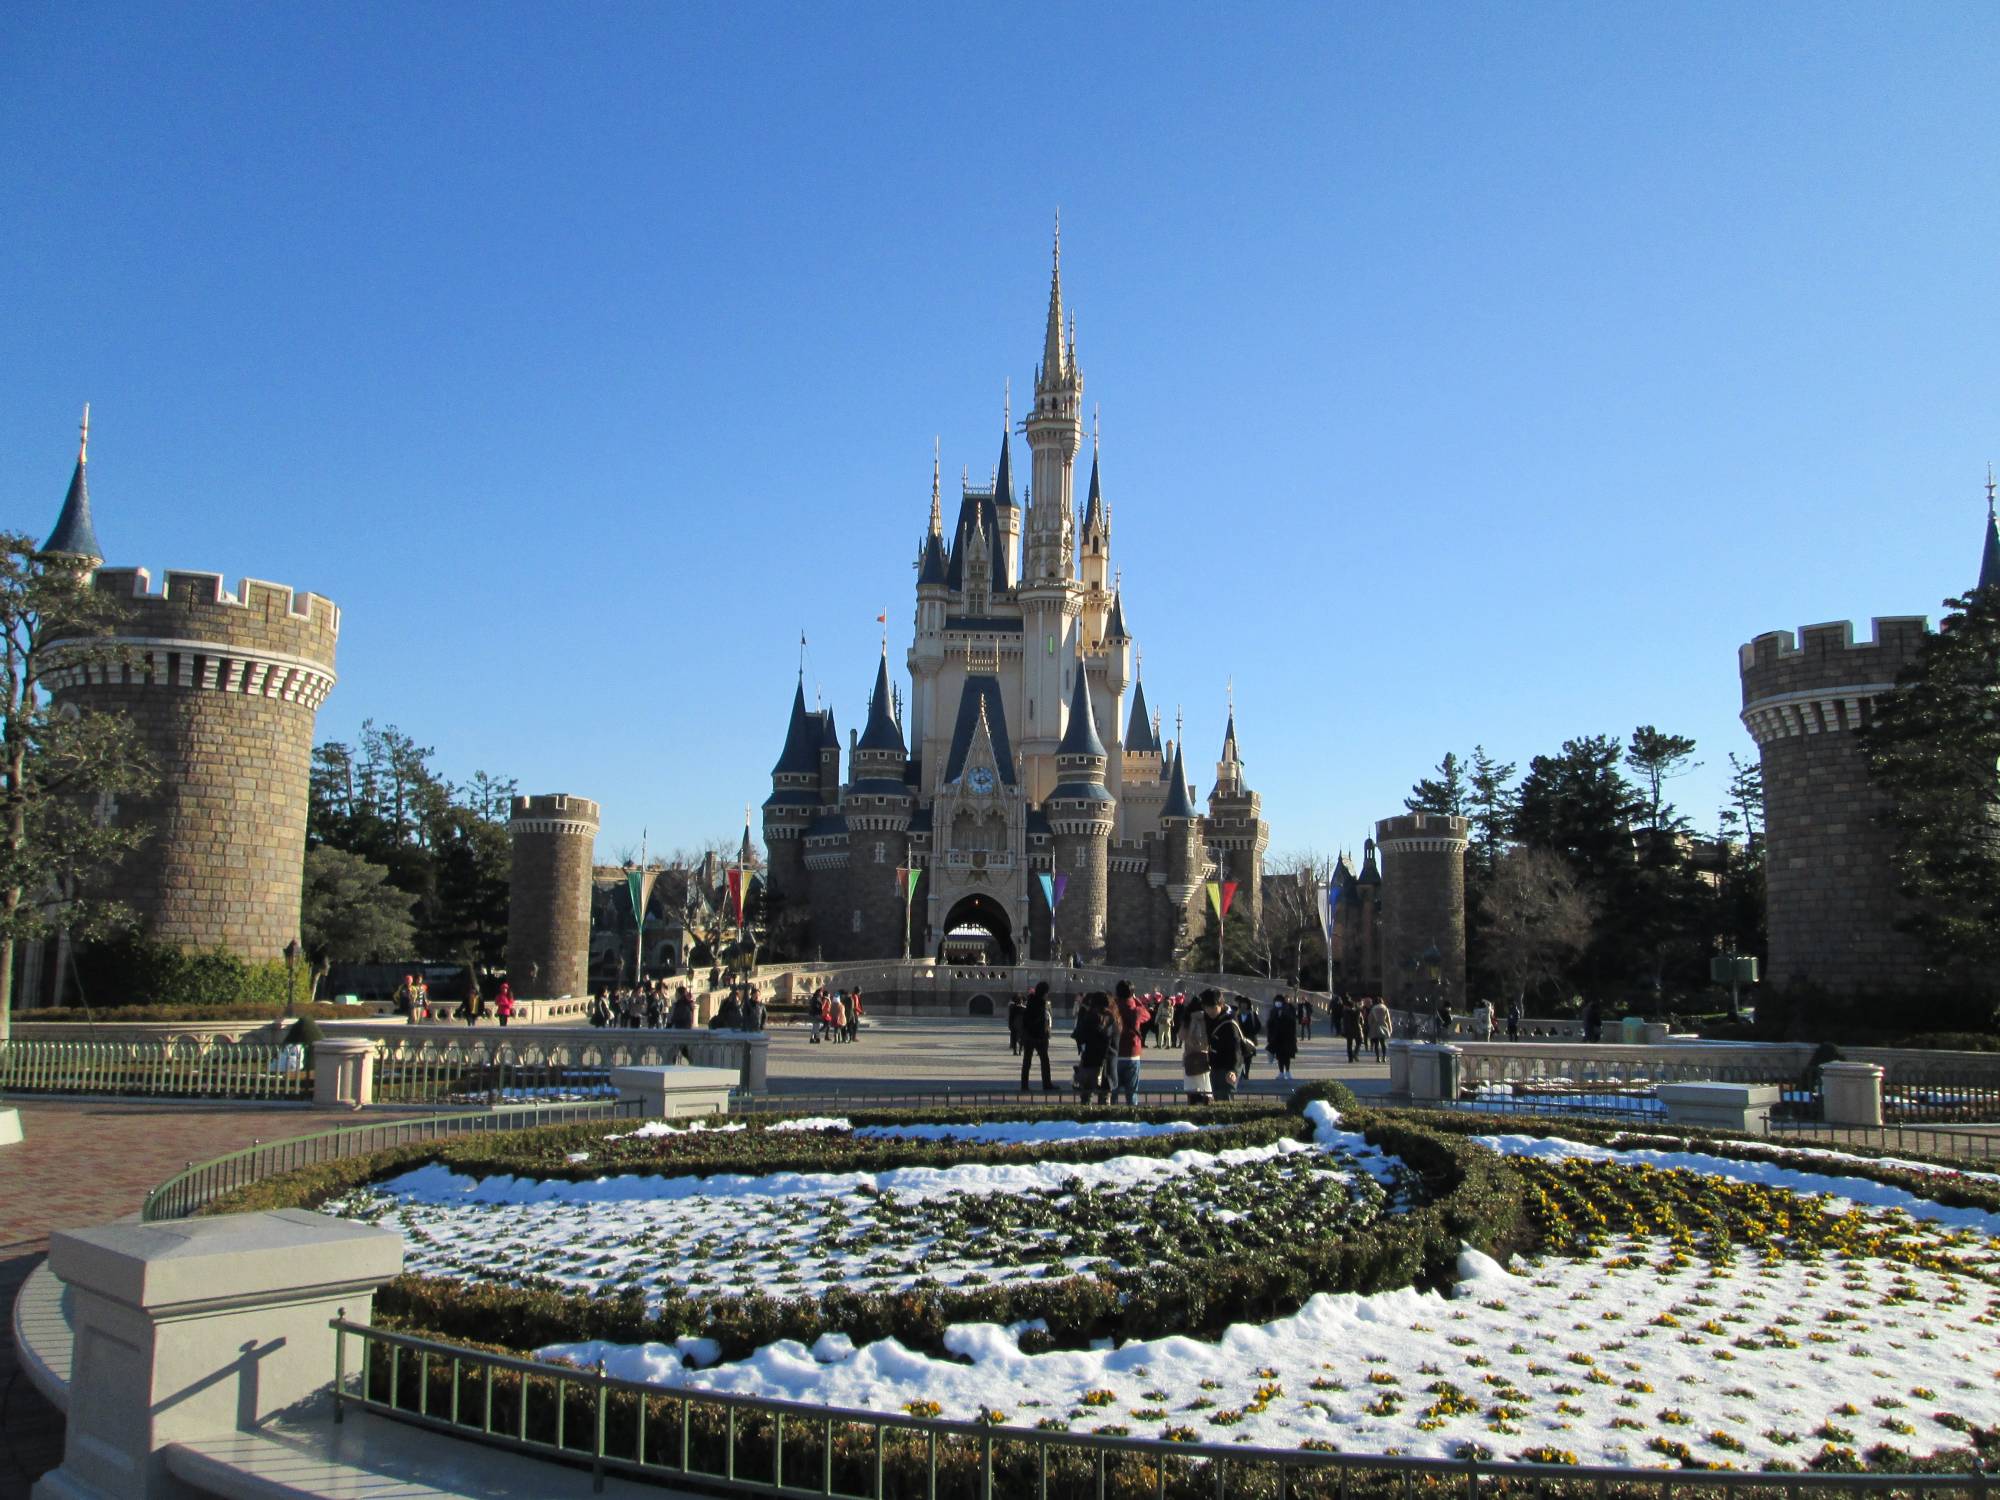 Tokyo Disneyland Castle